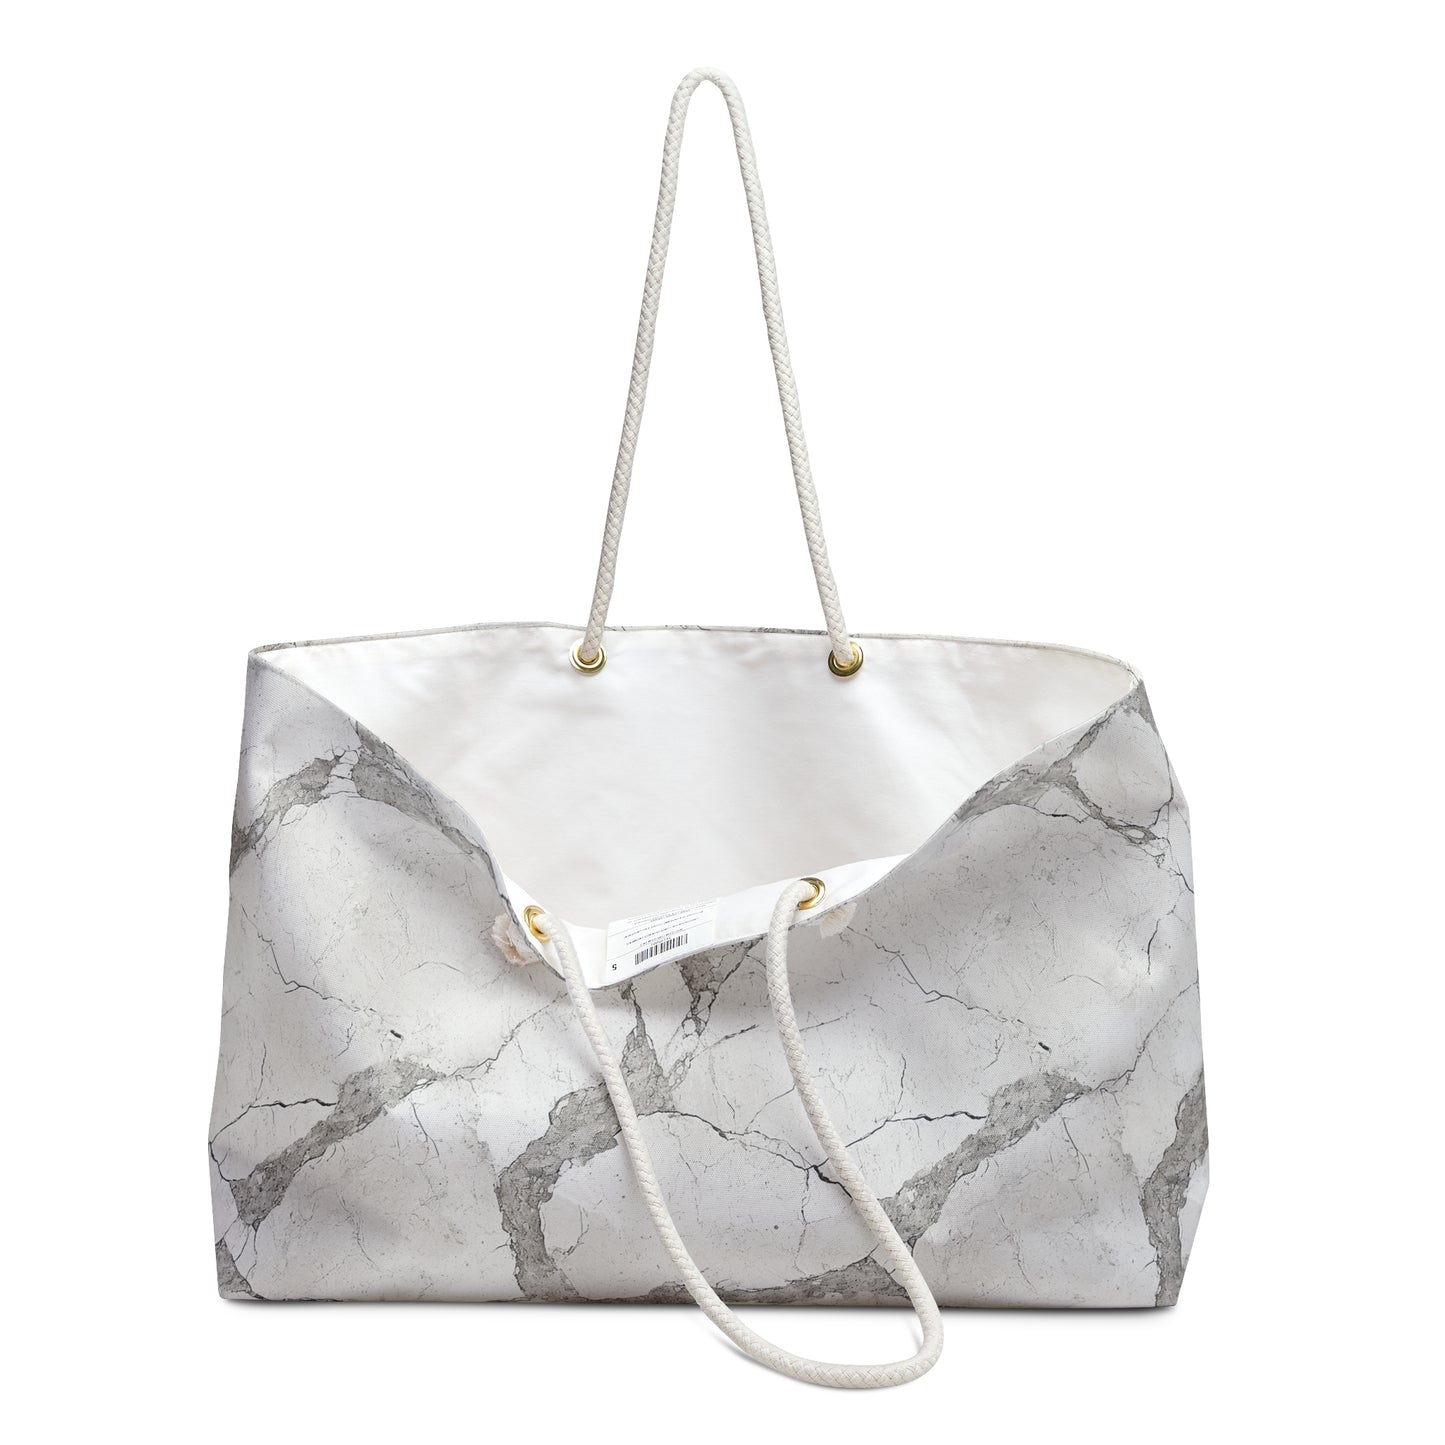 Interior Designer Tote bag, Natural quartz stone travel bag, weekender tote, gym bag, design essentials